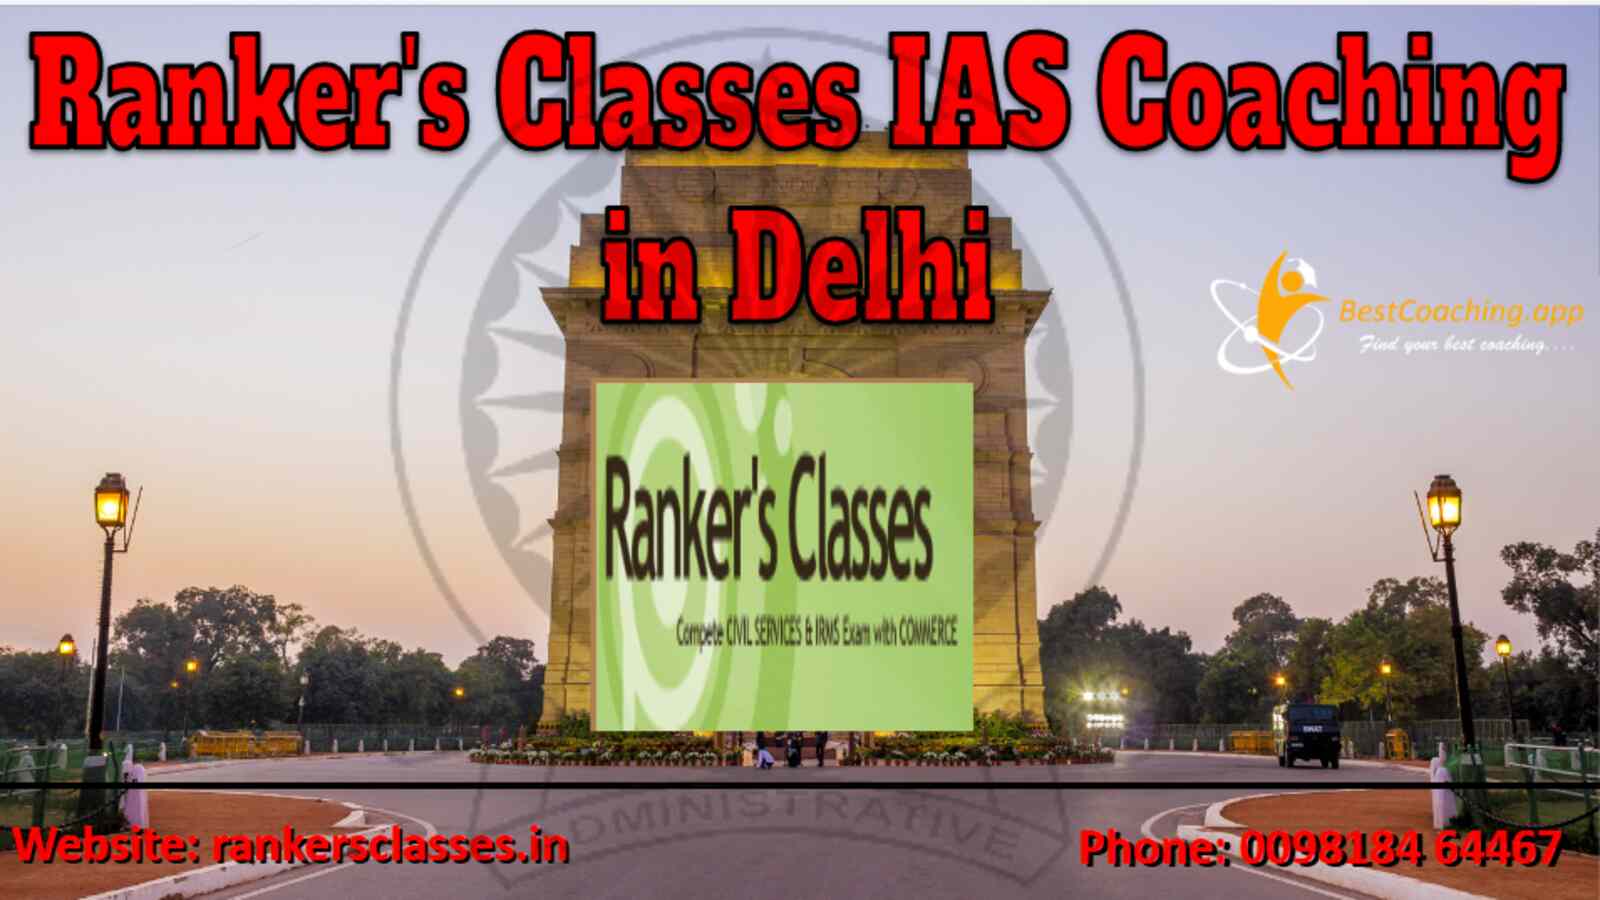 Ranker's Classes IAS Coaching Delhi